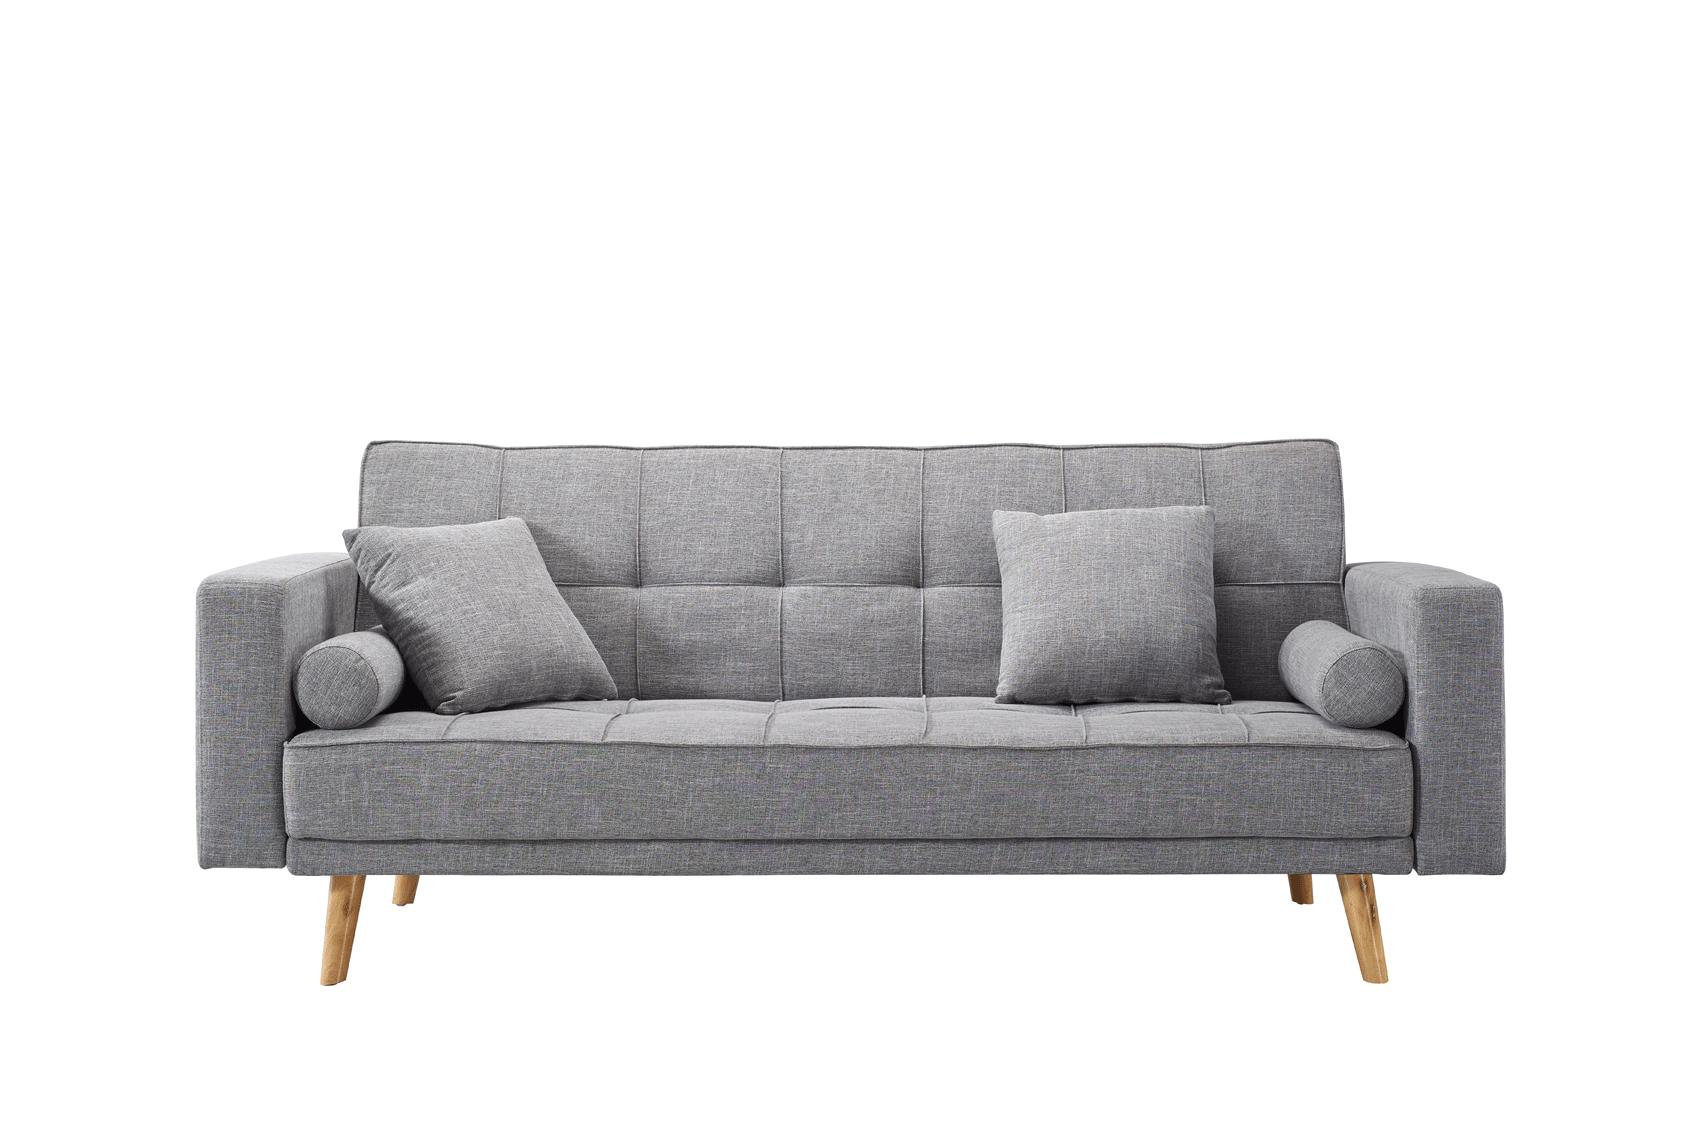 Contemporary, Modern Sofa bed Alex Alex-Sofa Bed in Gray Fabric